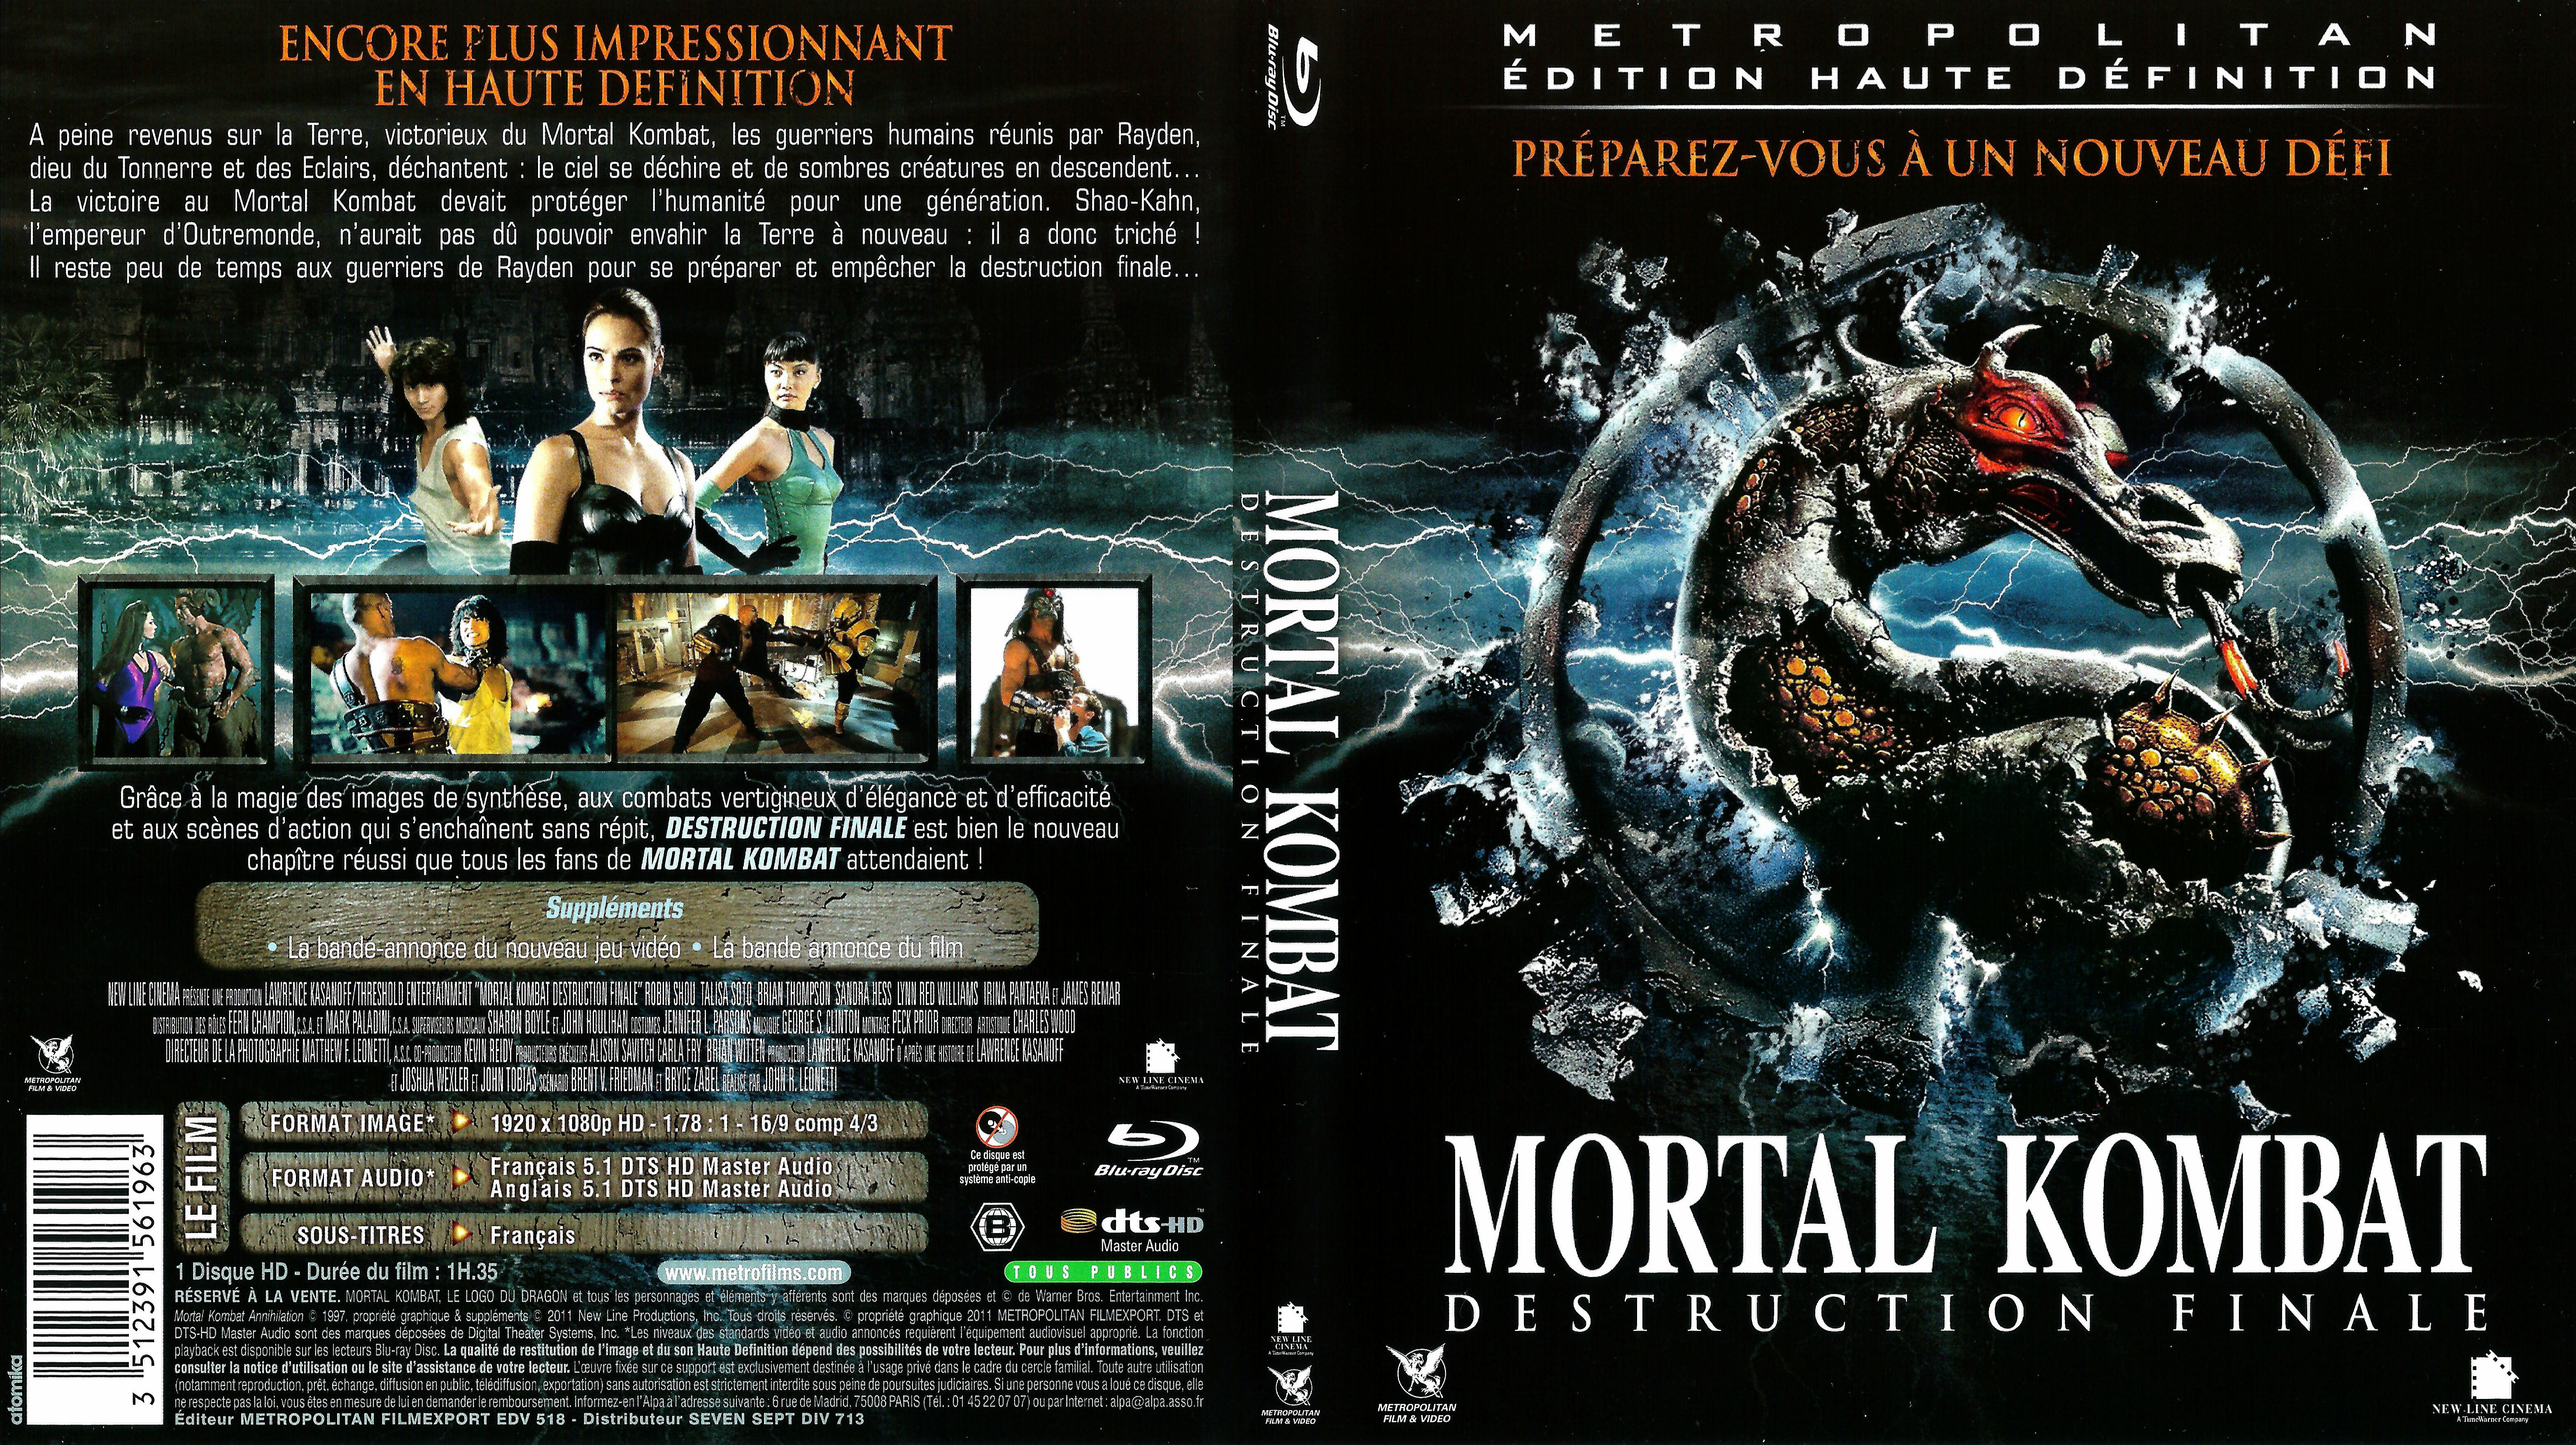 Jaquette DVD Mortal Kombat, destruction finale (BLU-RAY)